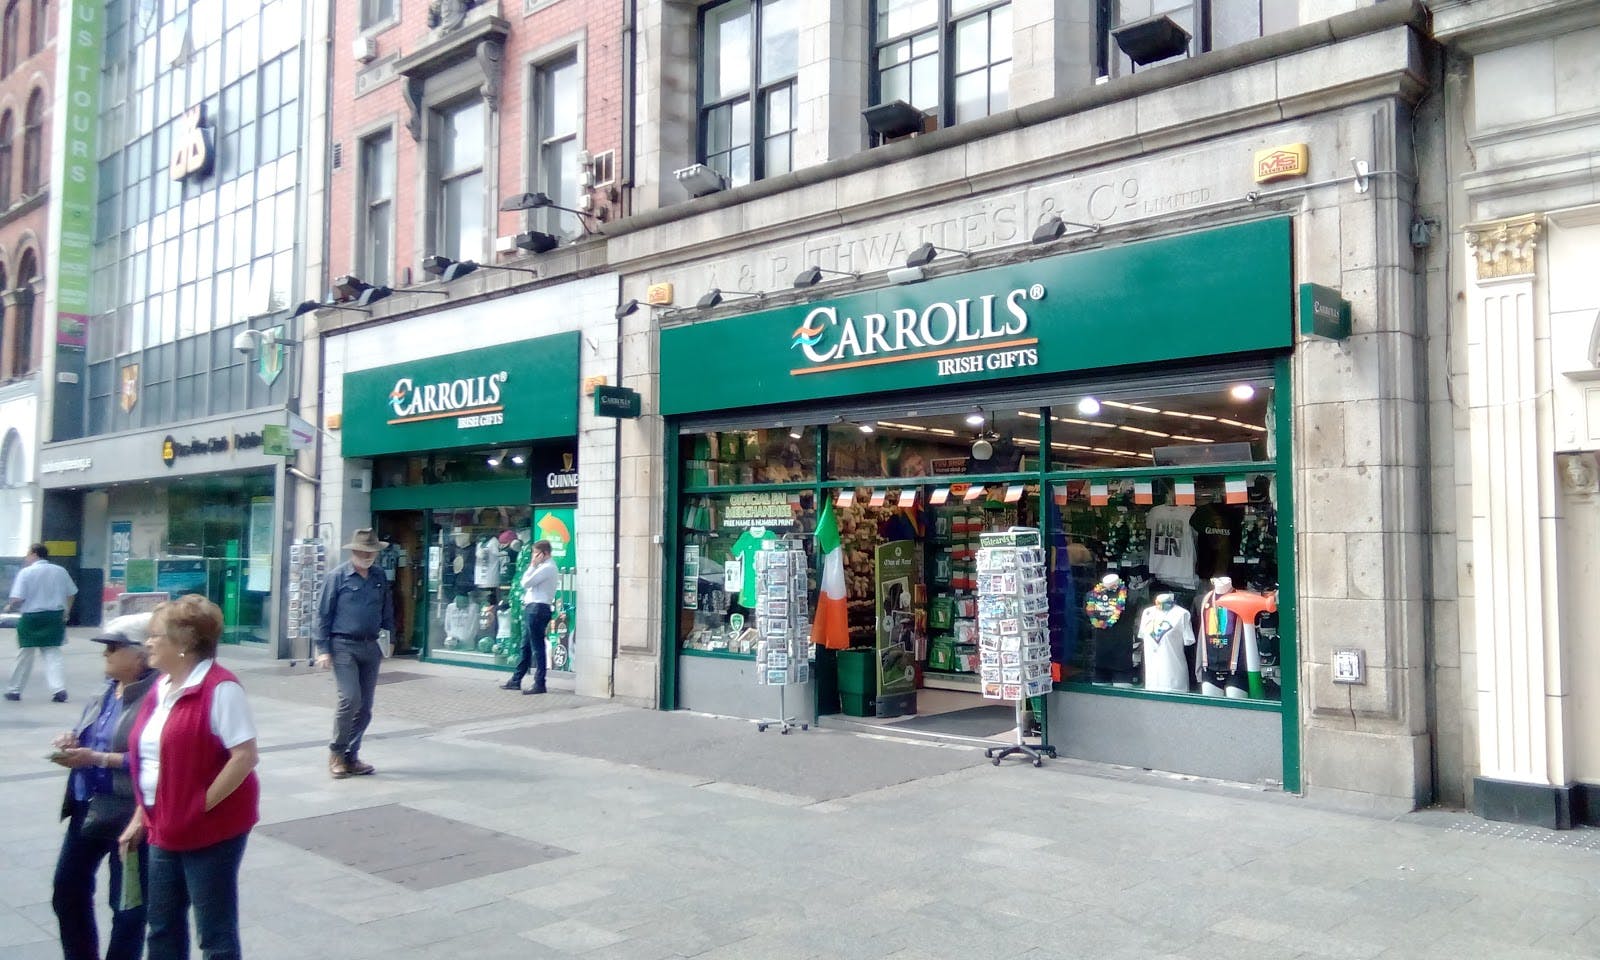 Image - Carrolls Irish Gifts